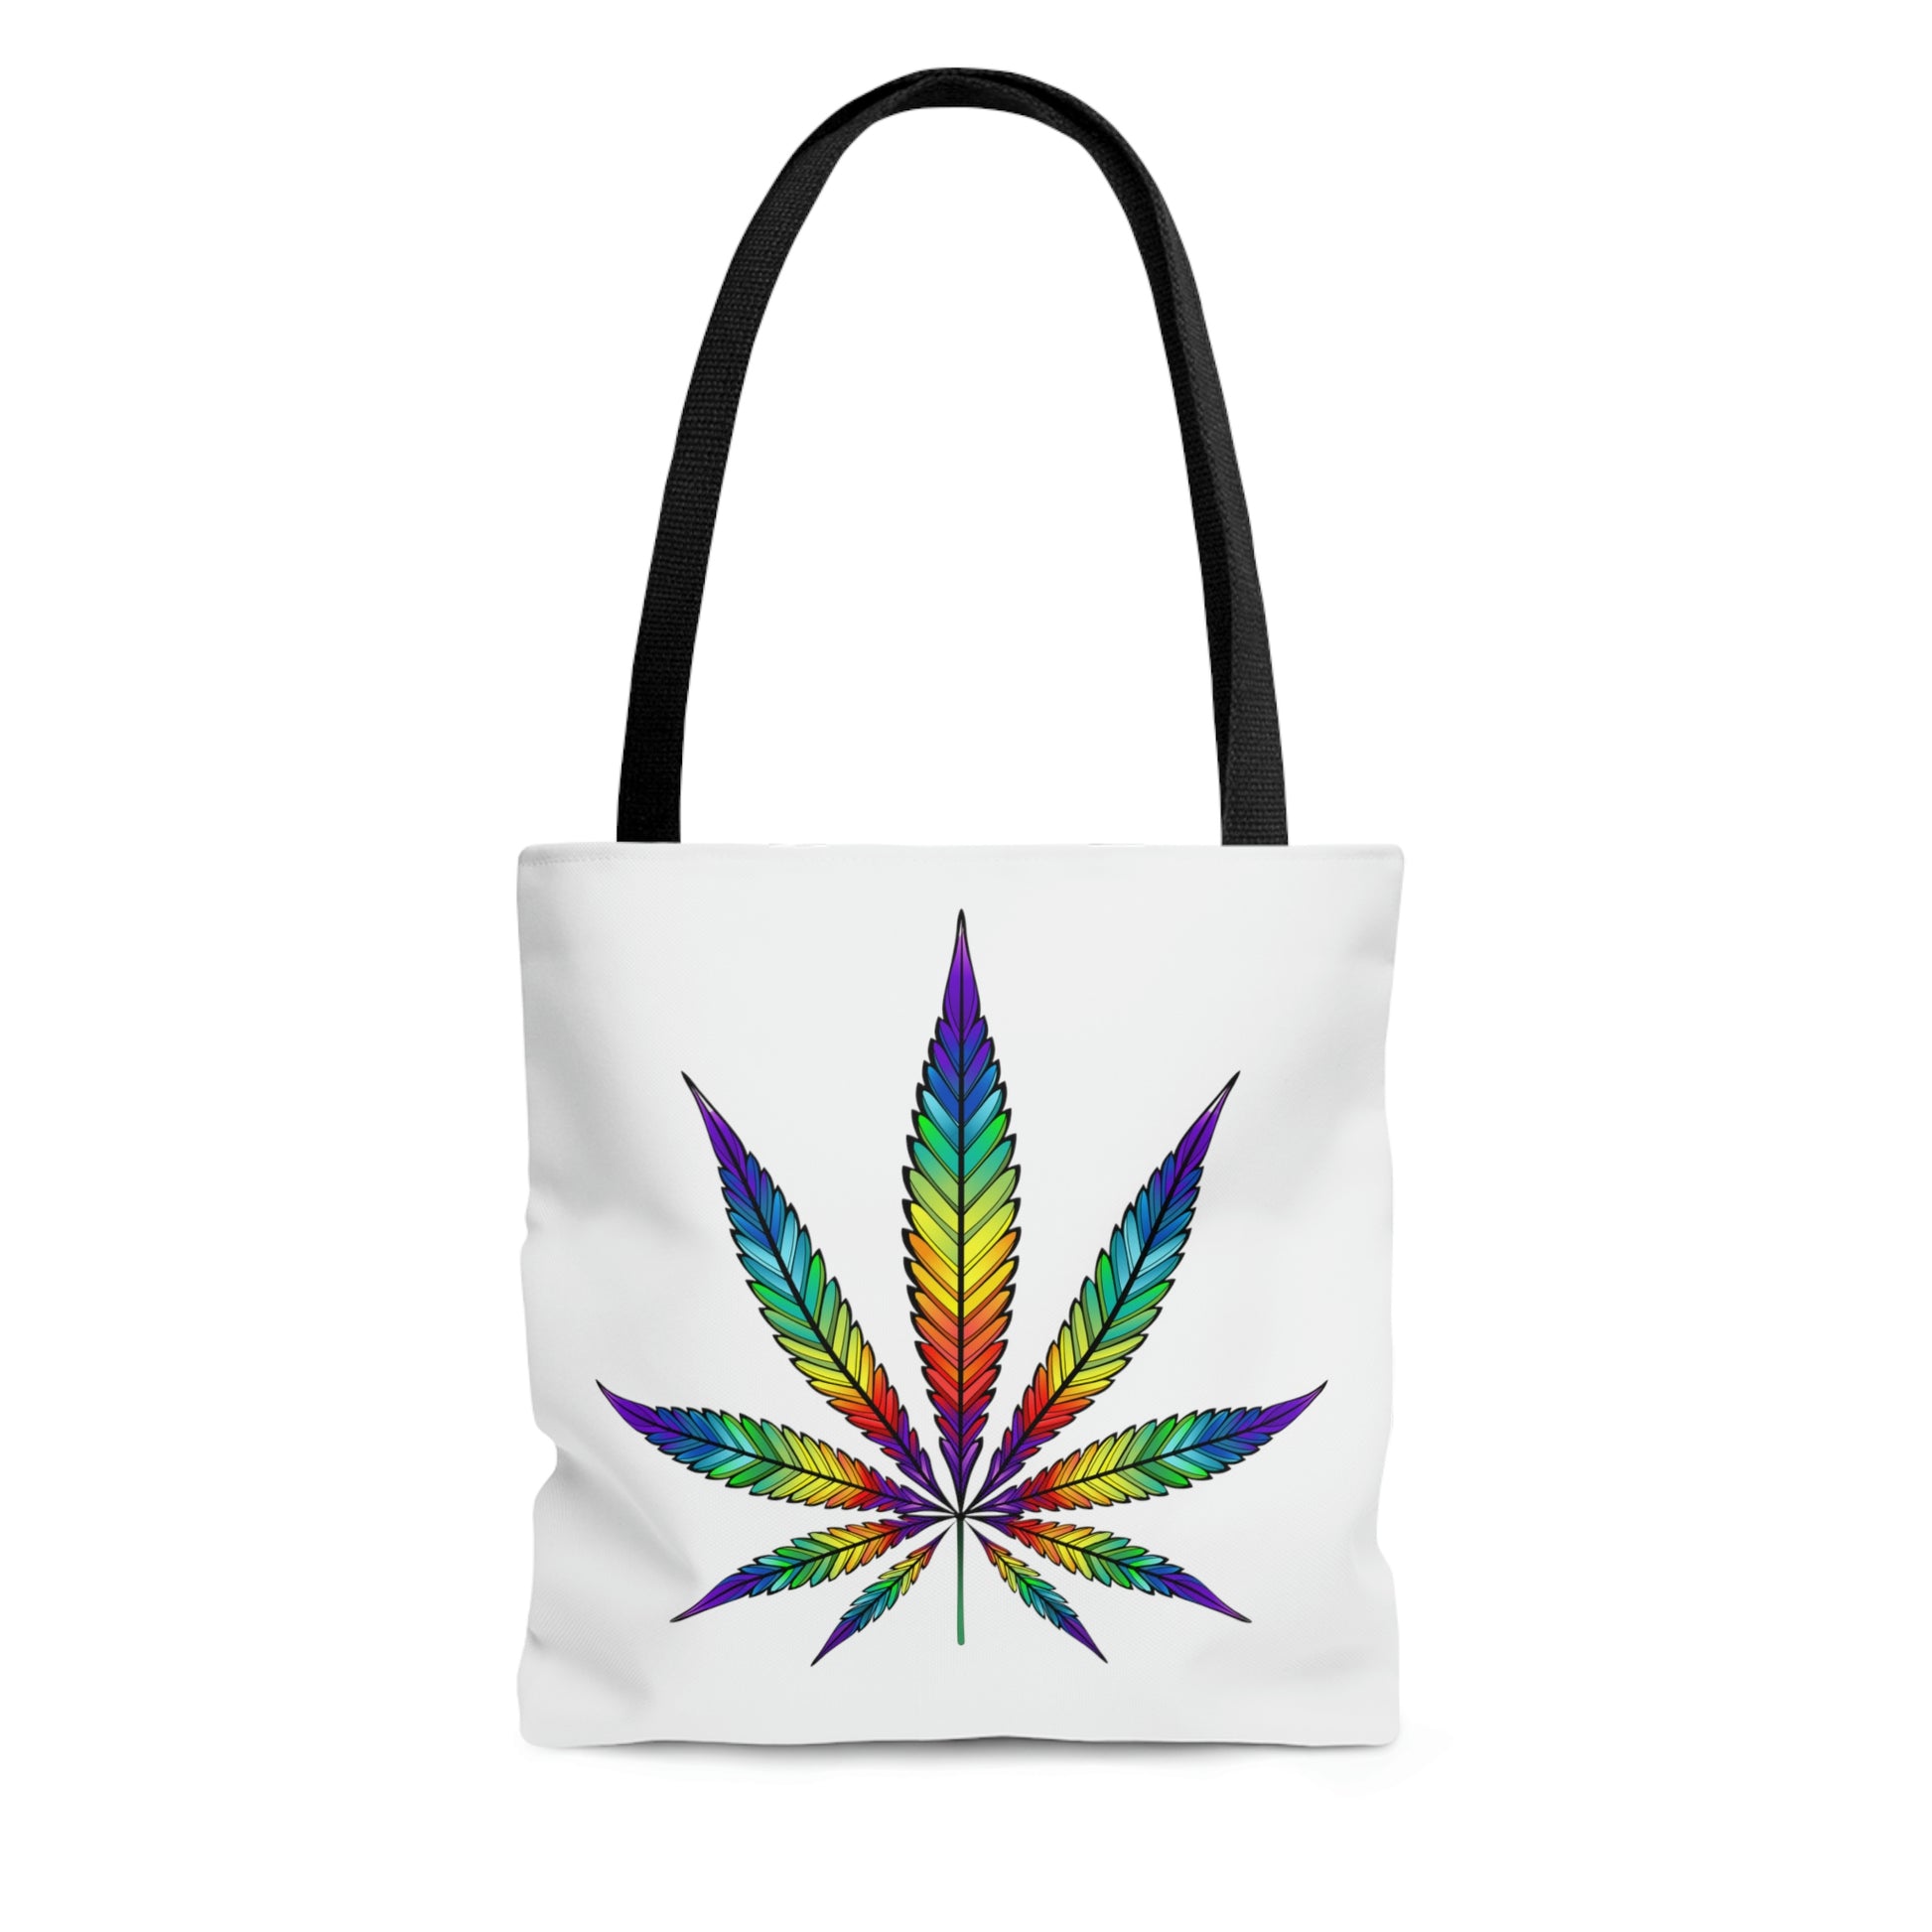 A white Colorful Rainbow Marijuana Tote Bag with a rainbow cannabis leaf graphic